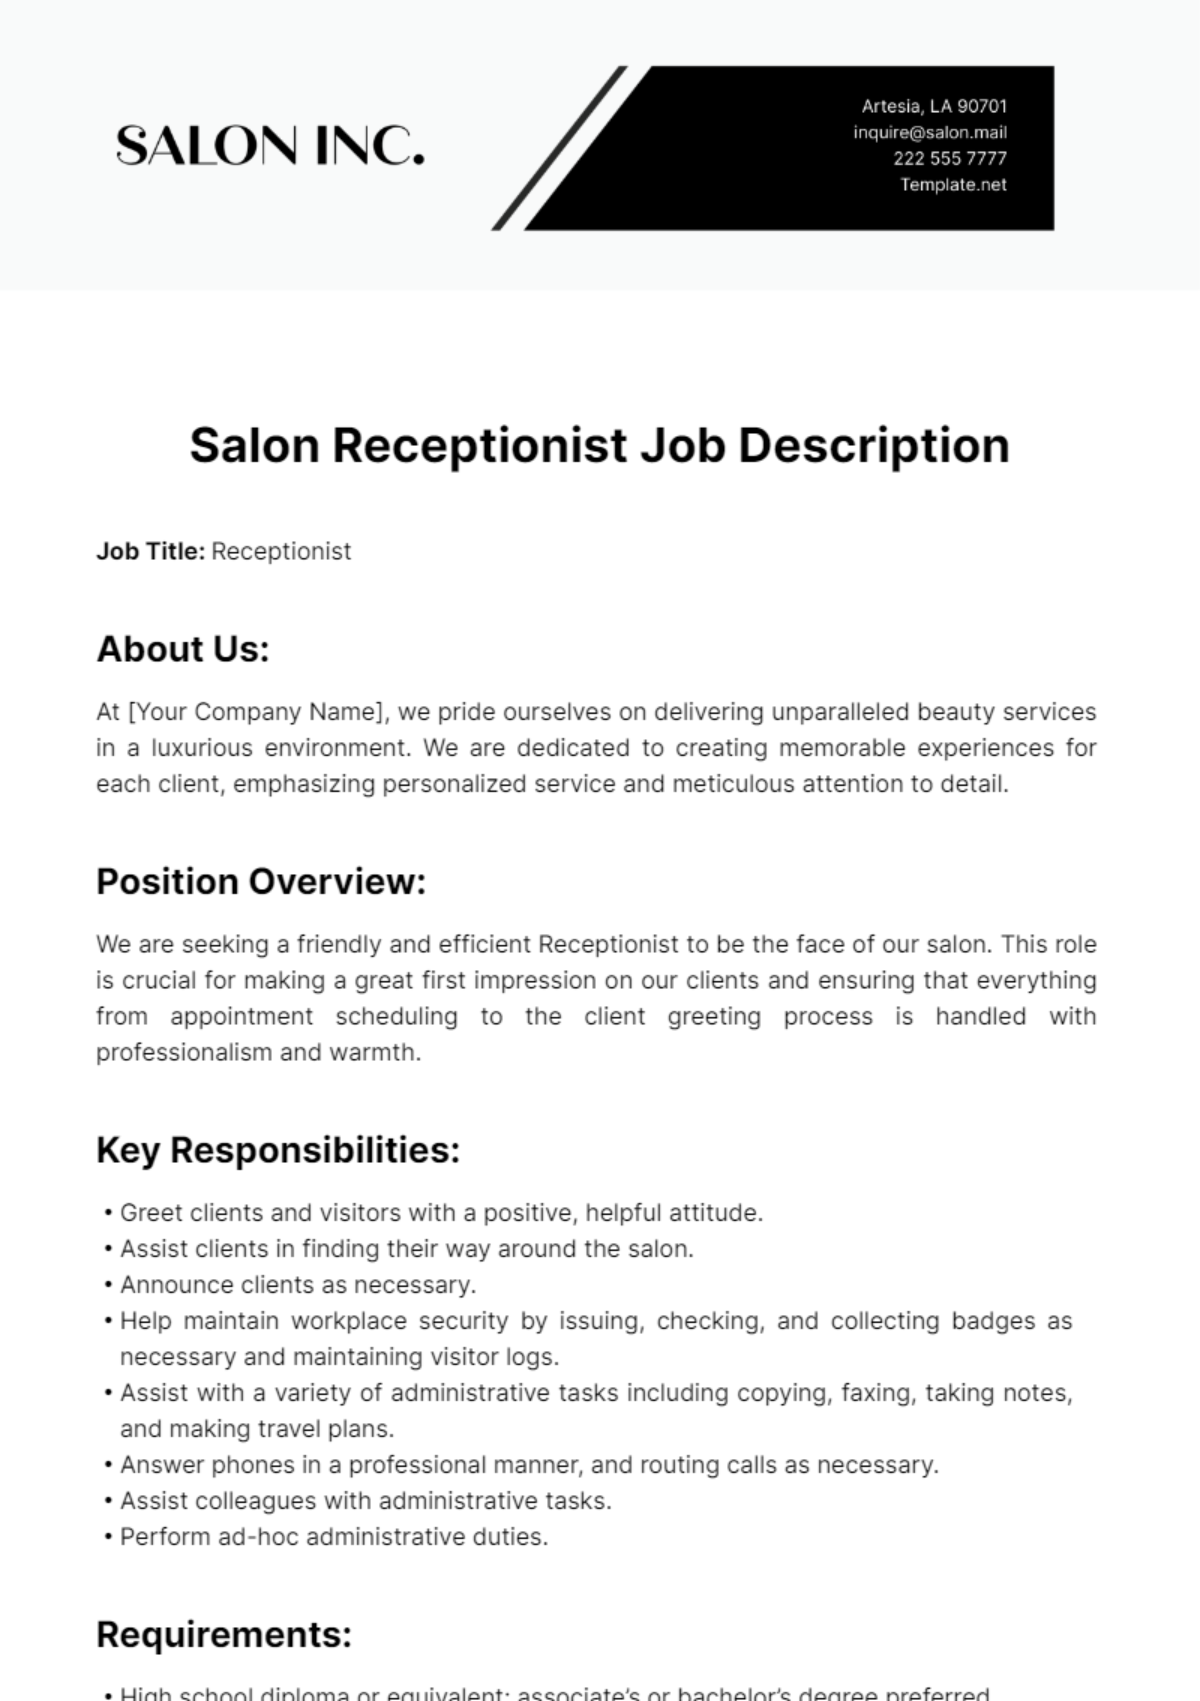 Salon Receptionist Job Description Template